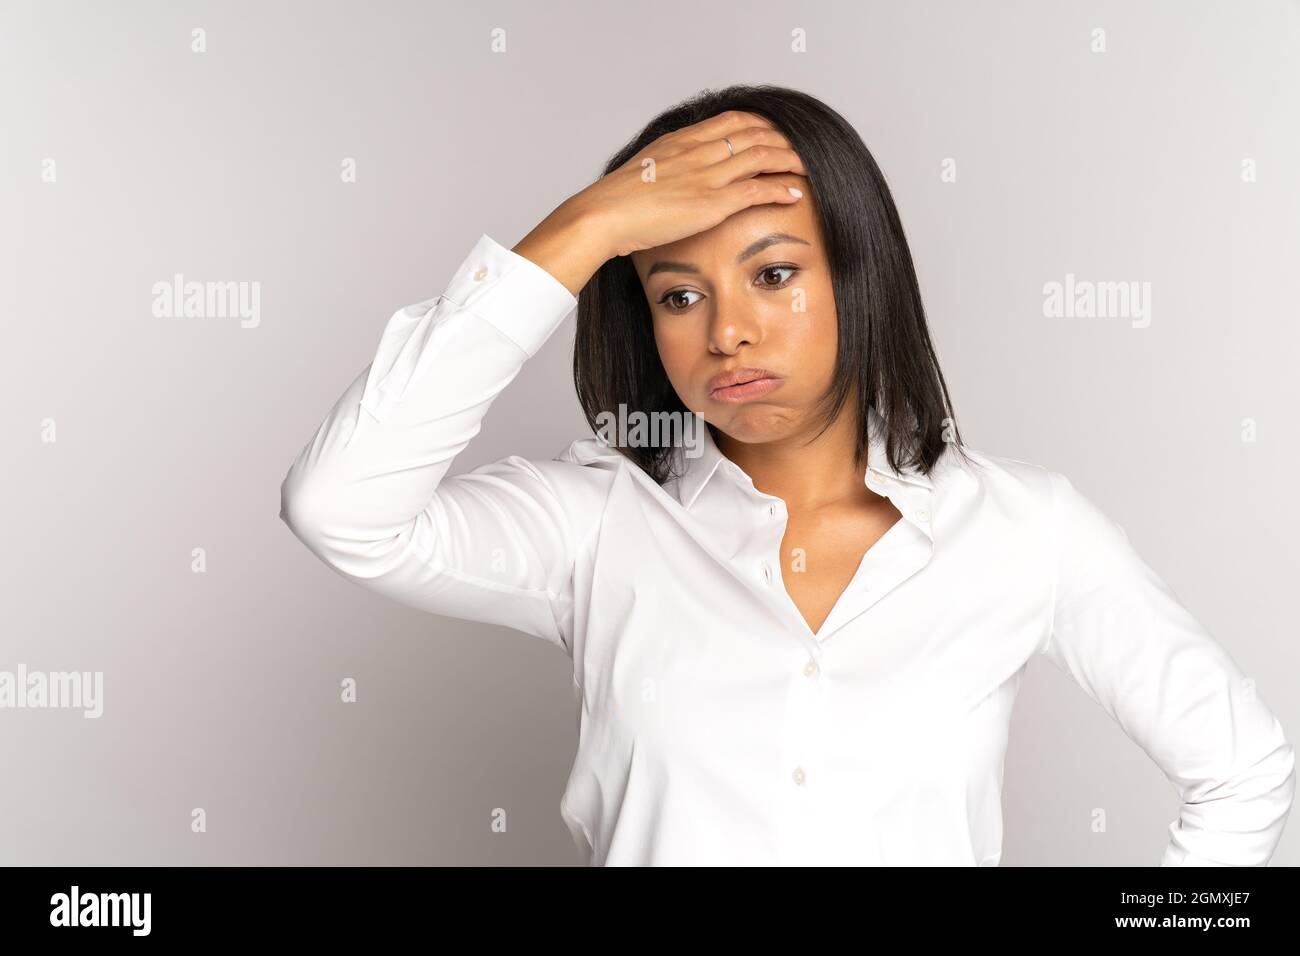 Woman sweaty hand on head Stock Photo by ©alanpoulson 29124997